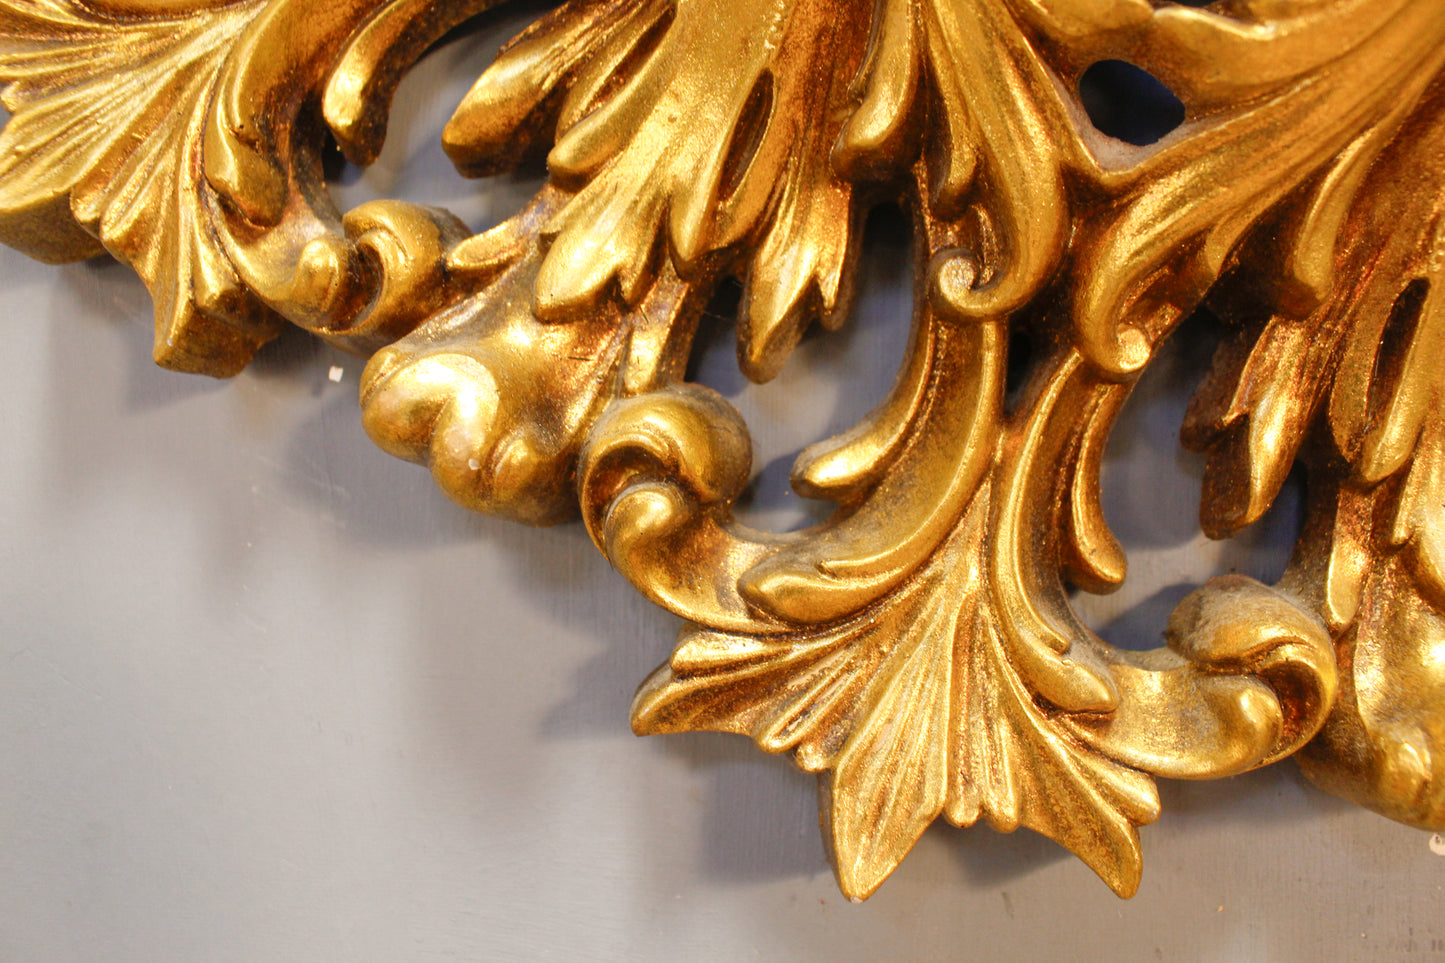 Ornate Gilded Wall Clock